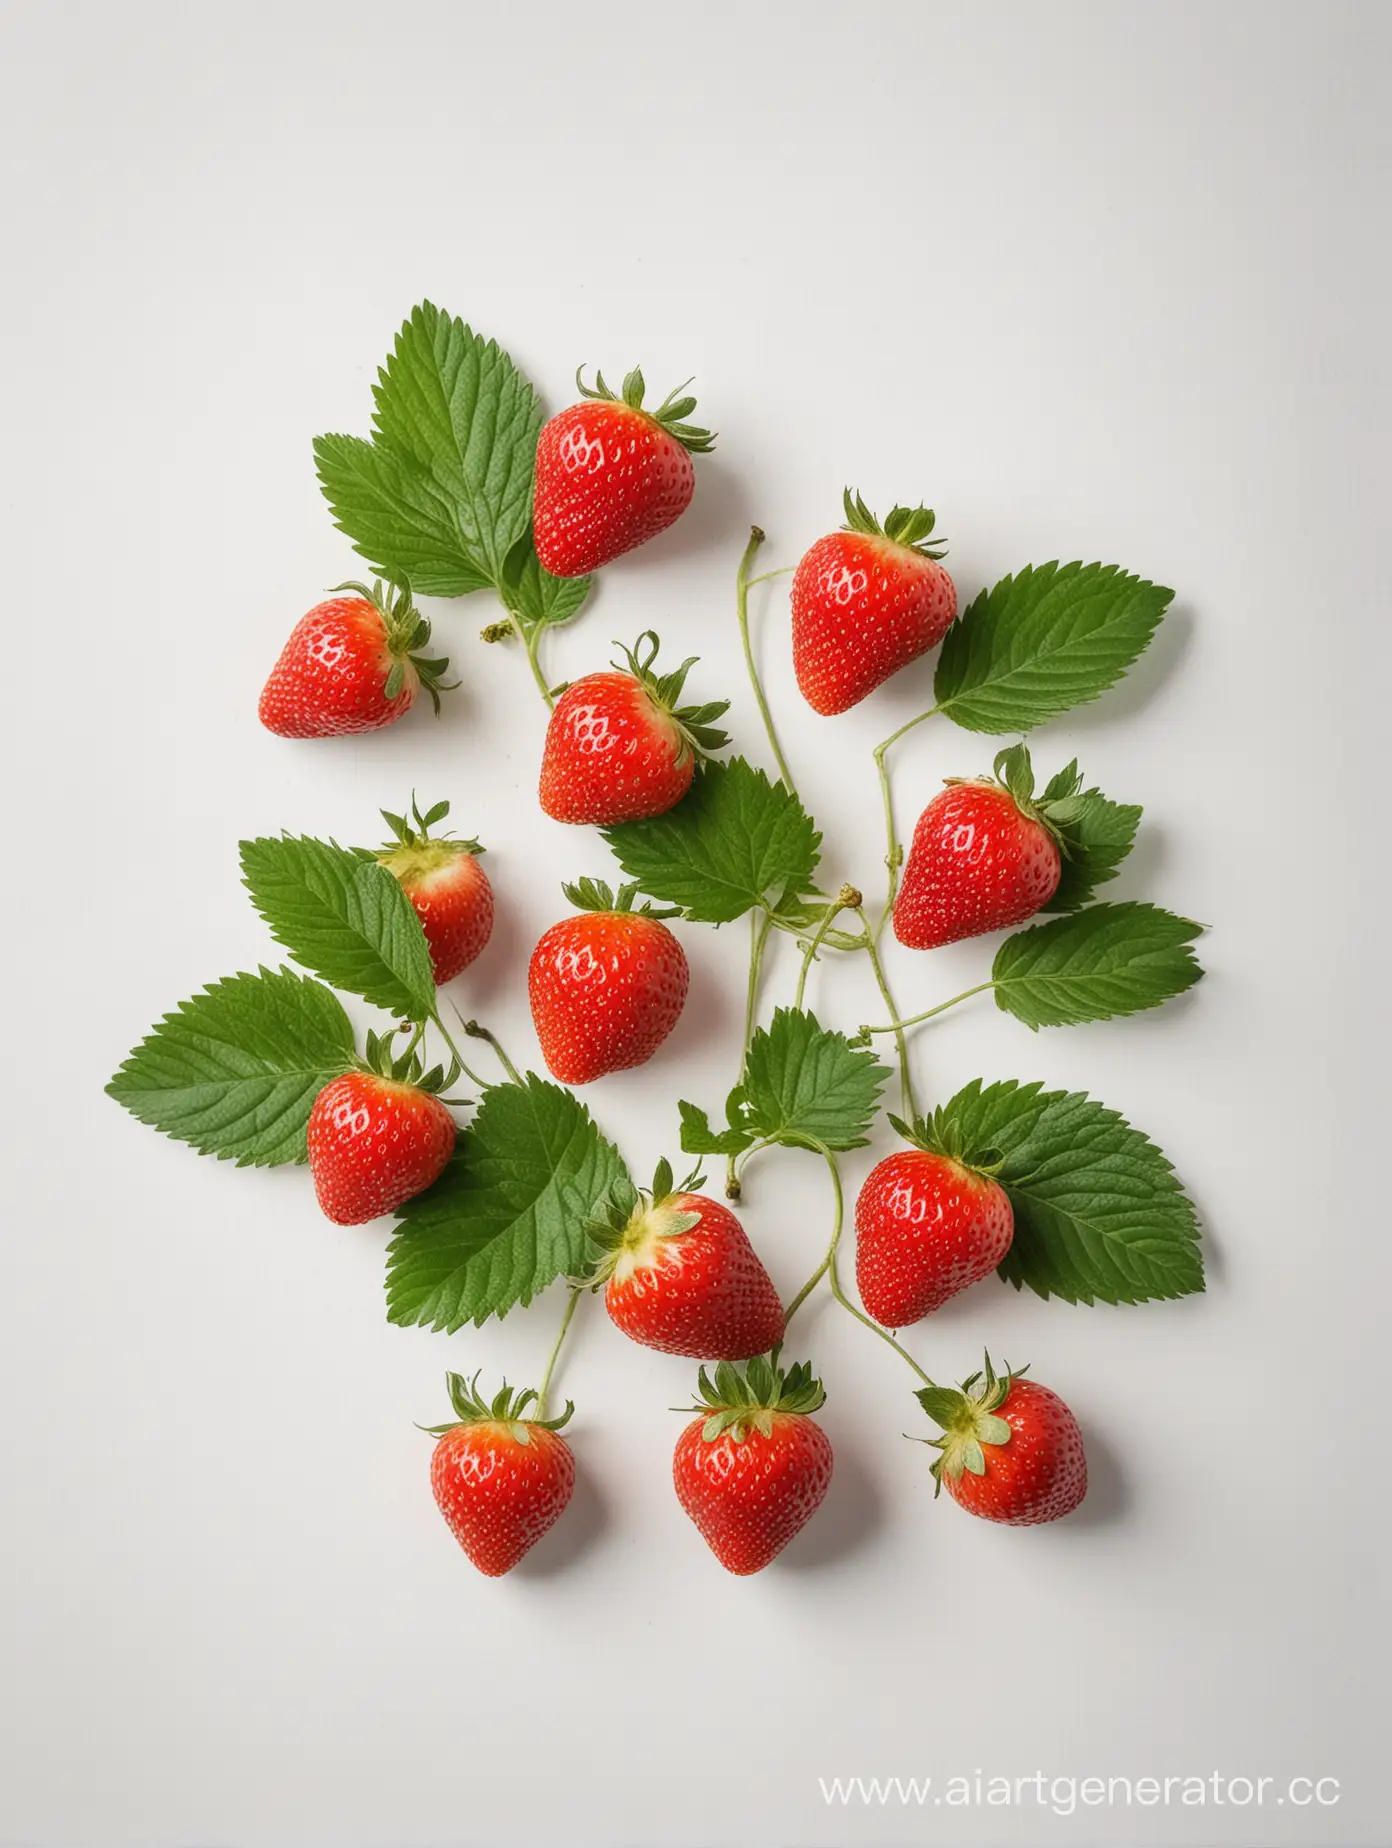 Alexandria Strawberry on white backgrond